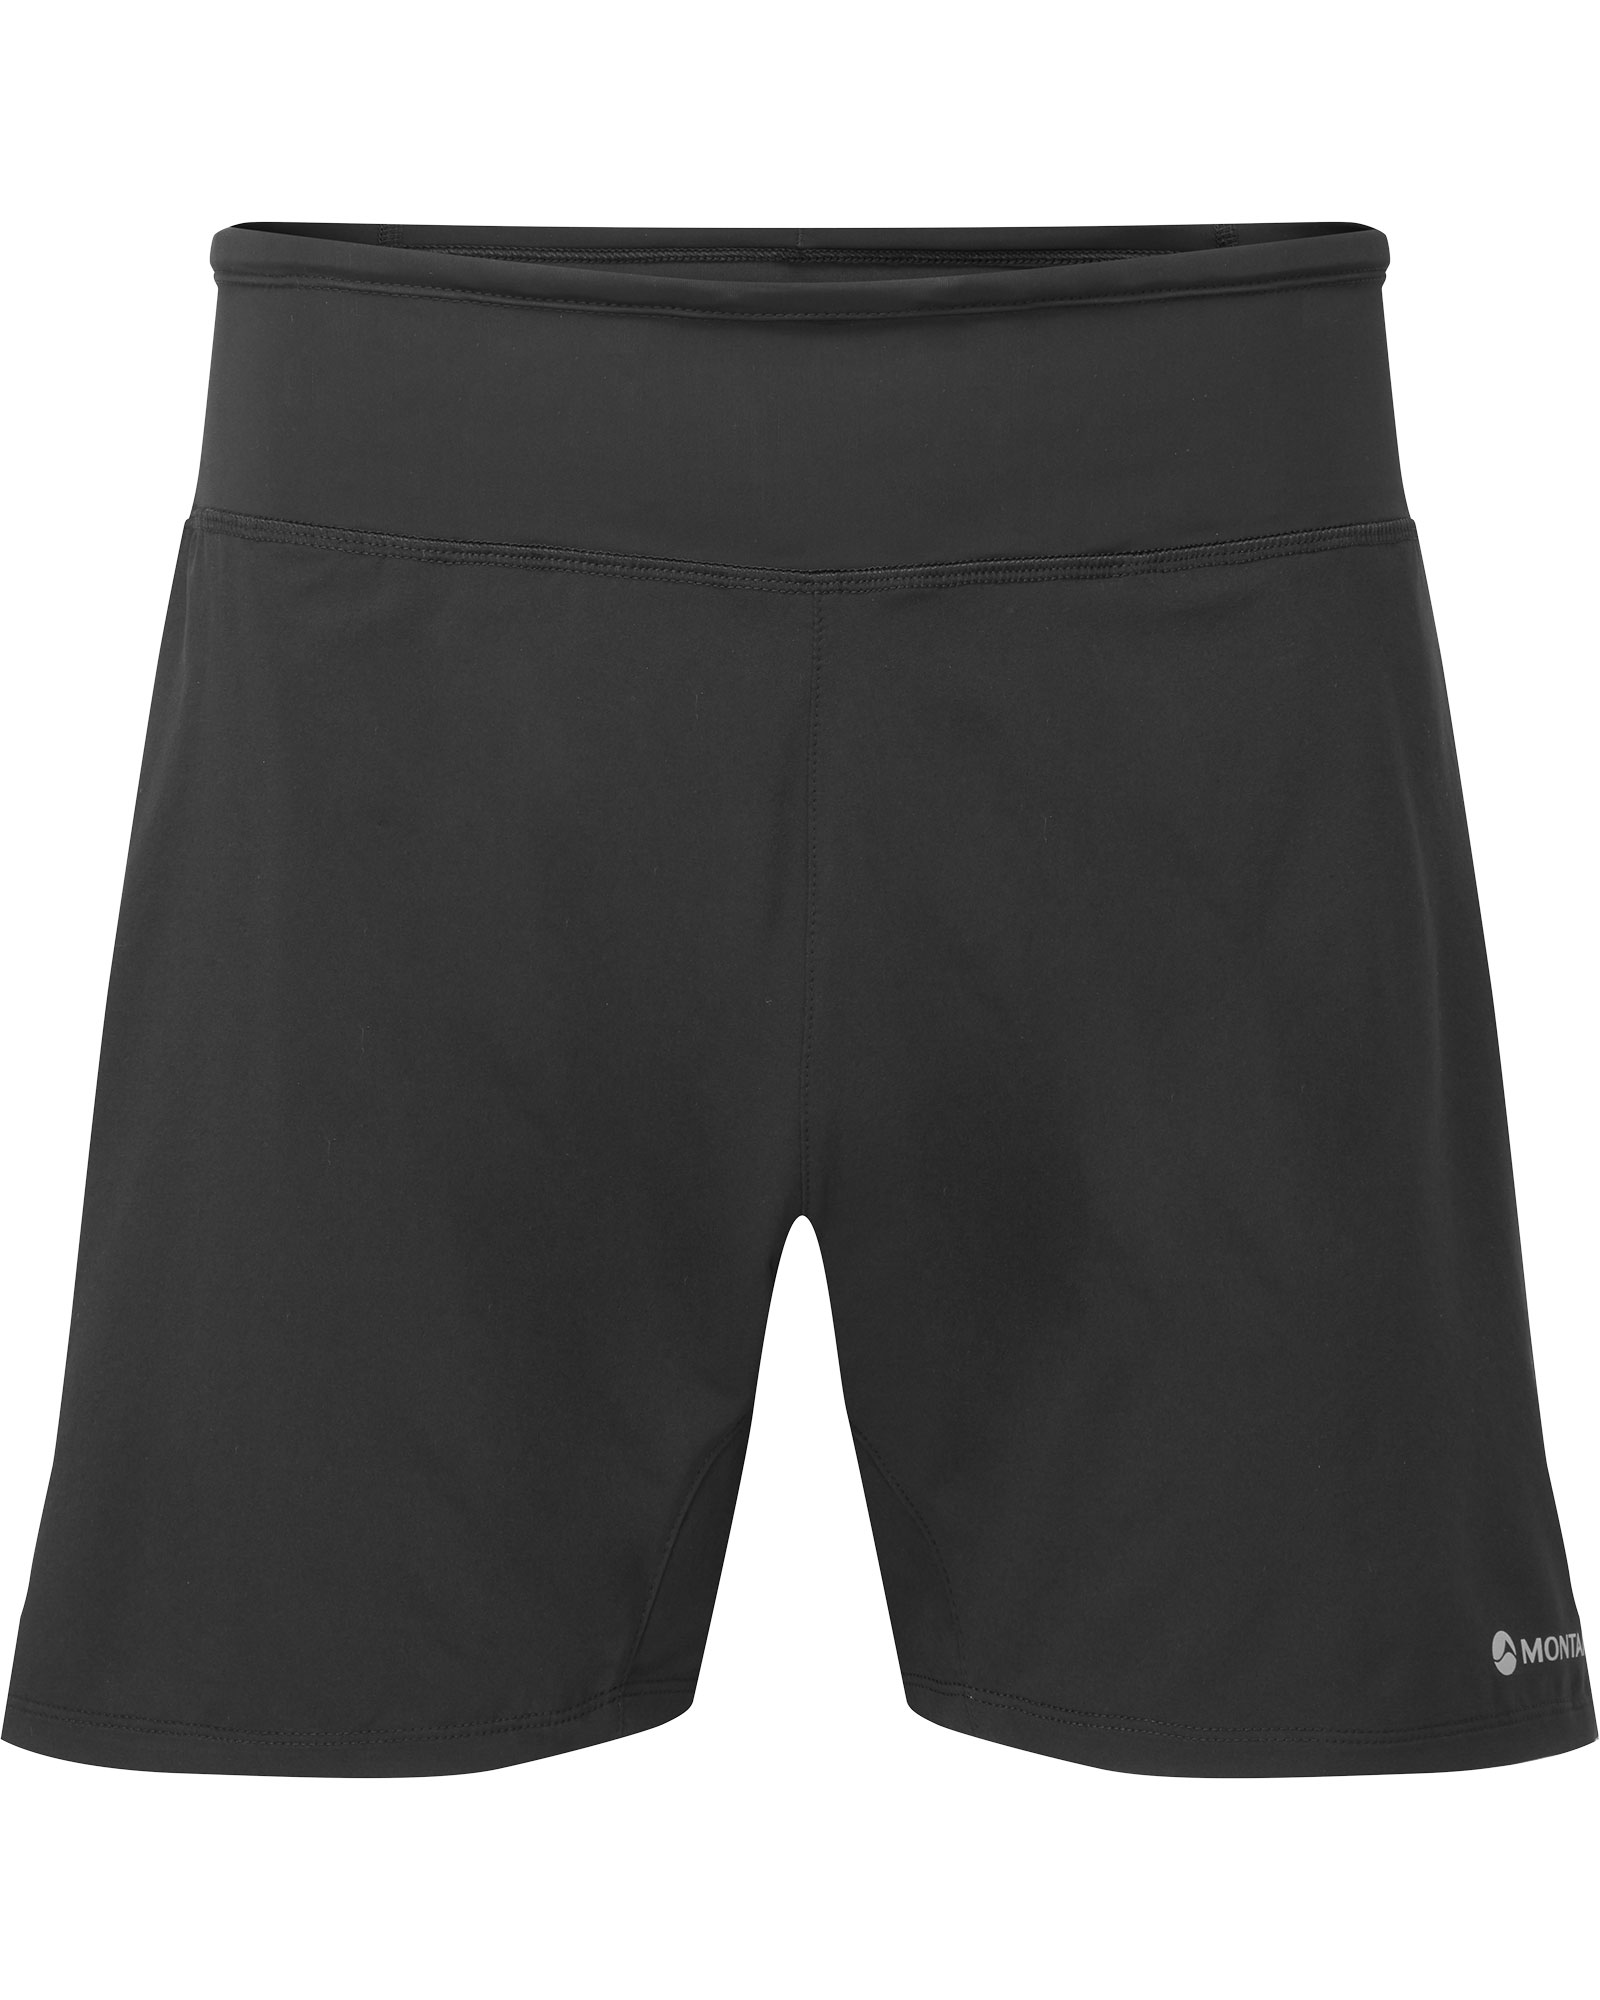 Montane Slipstream Men’s 5" Shorts - black XL